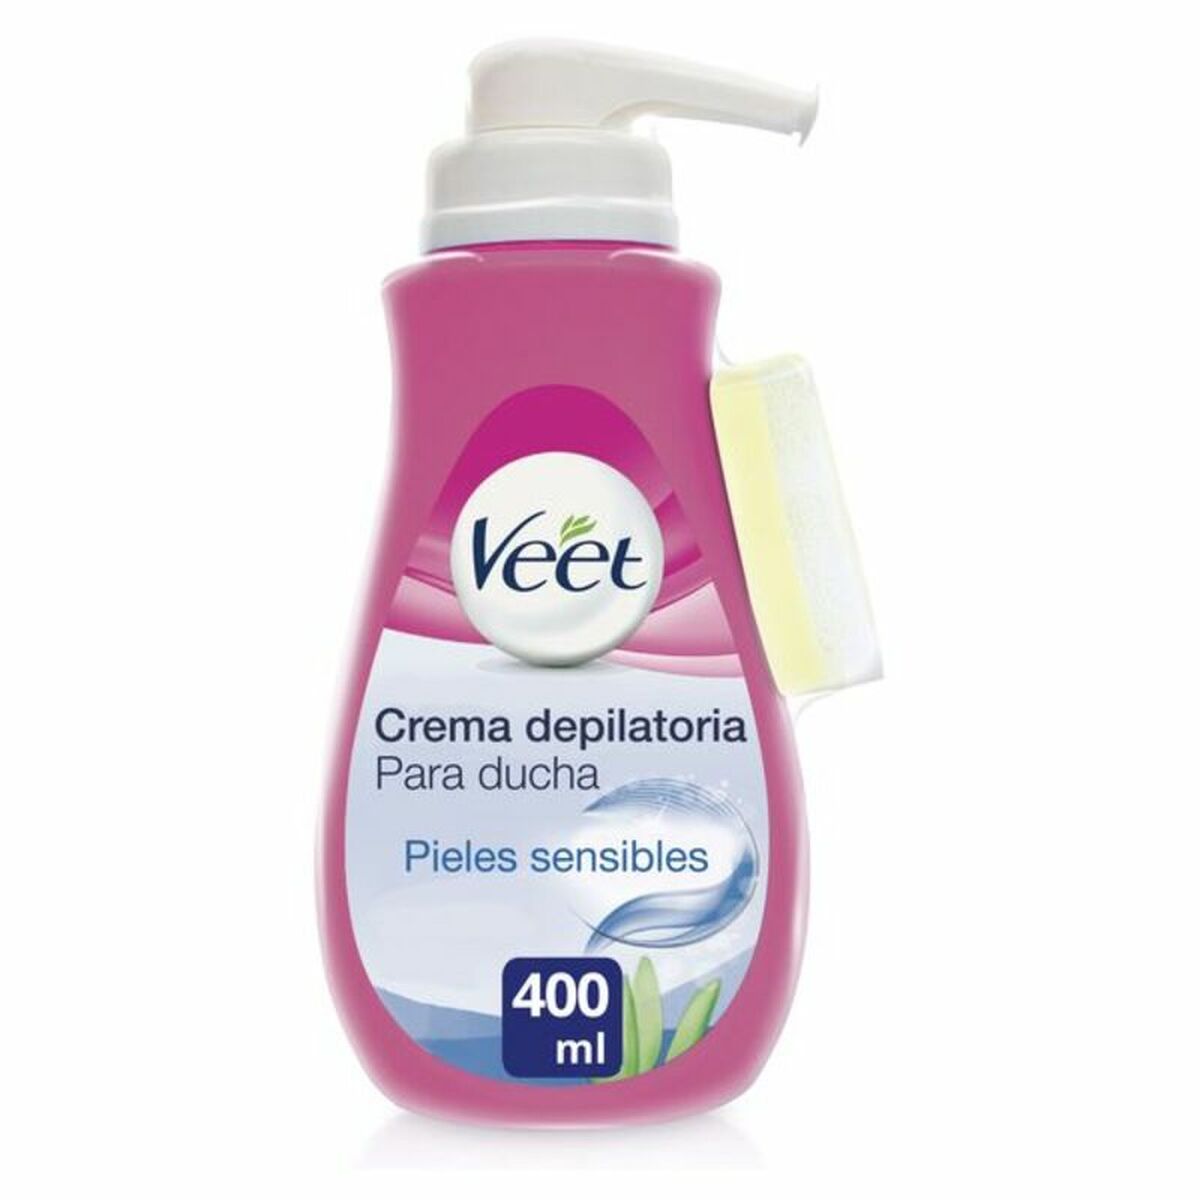 Veet Men Crema depilatoria piel sensible desde 8,55 €